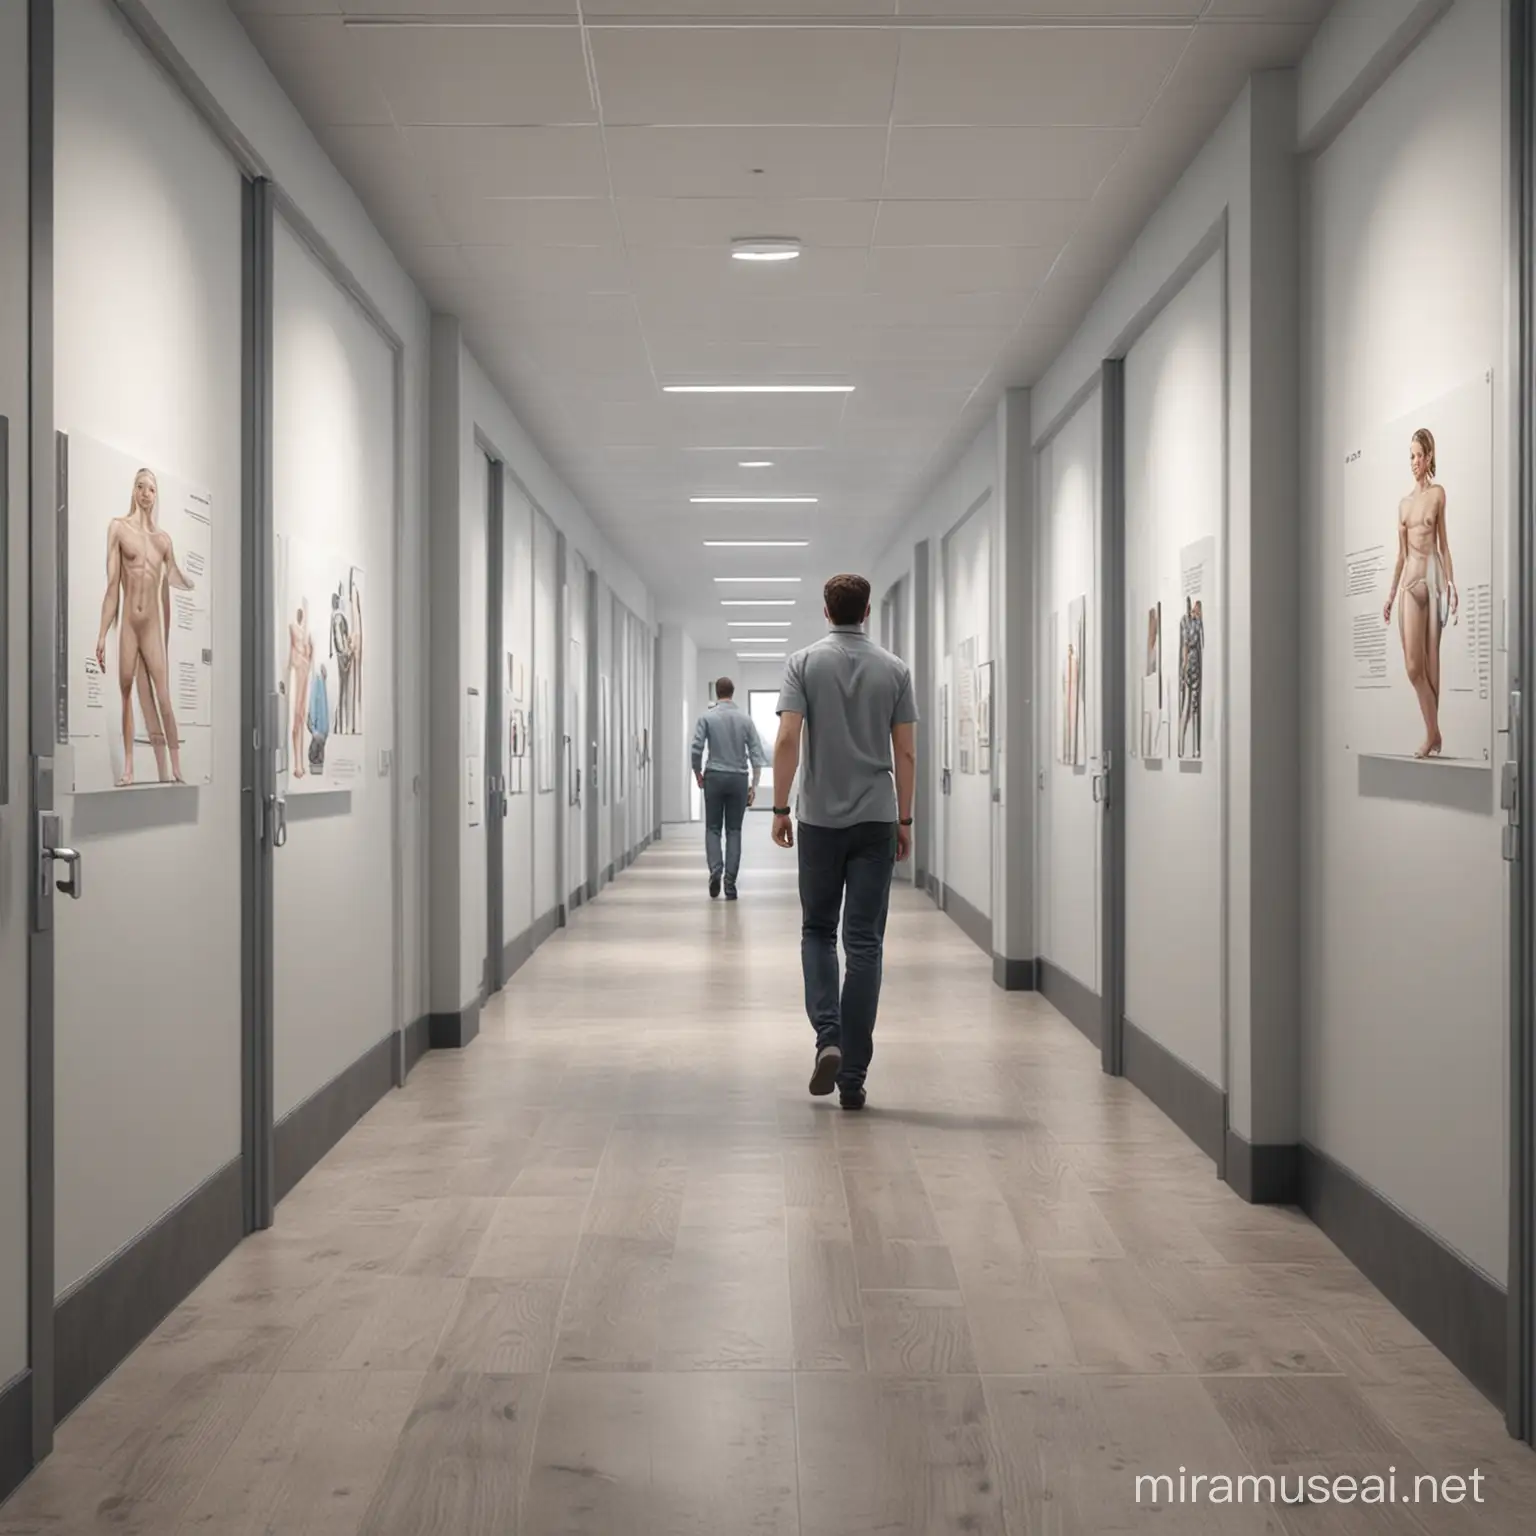 Physical walk-through of a collegue, hyper Realistic image
